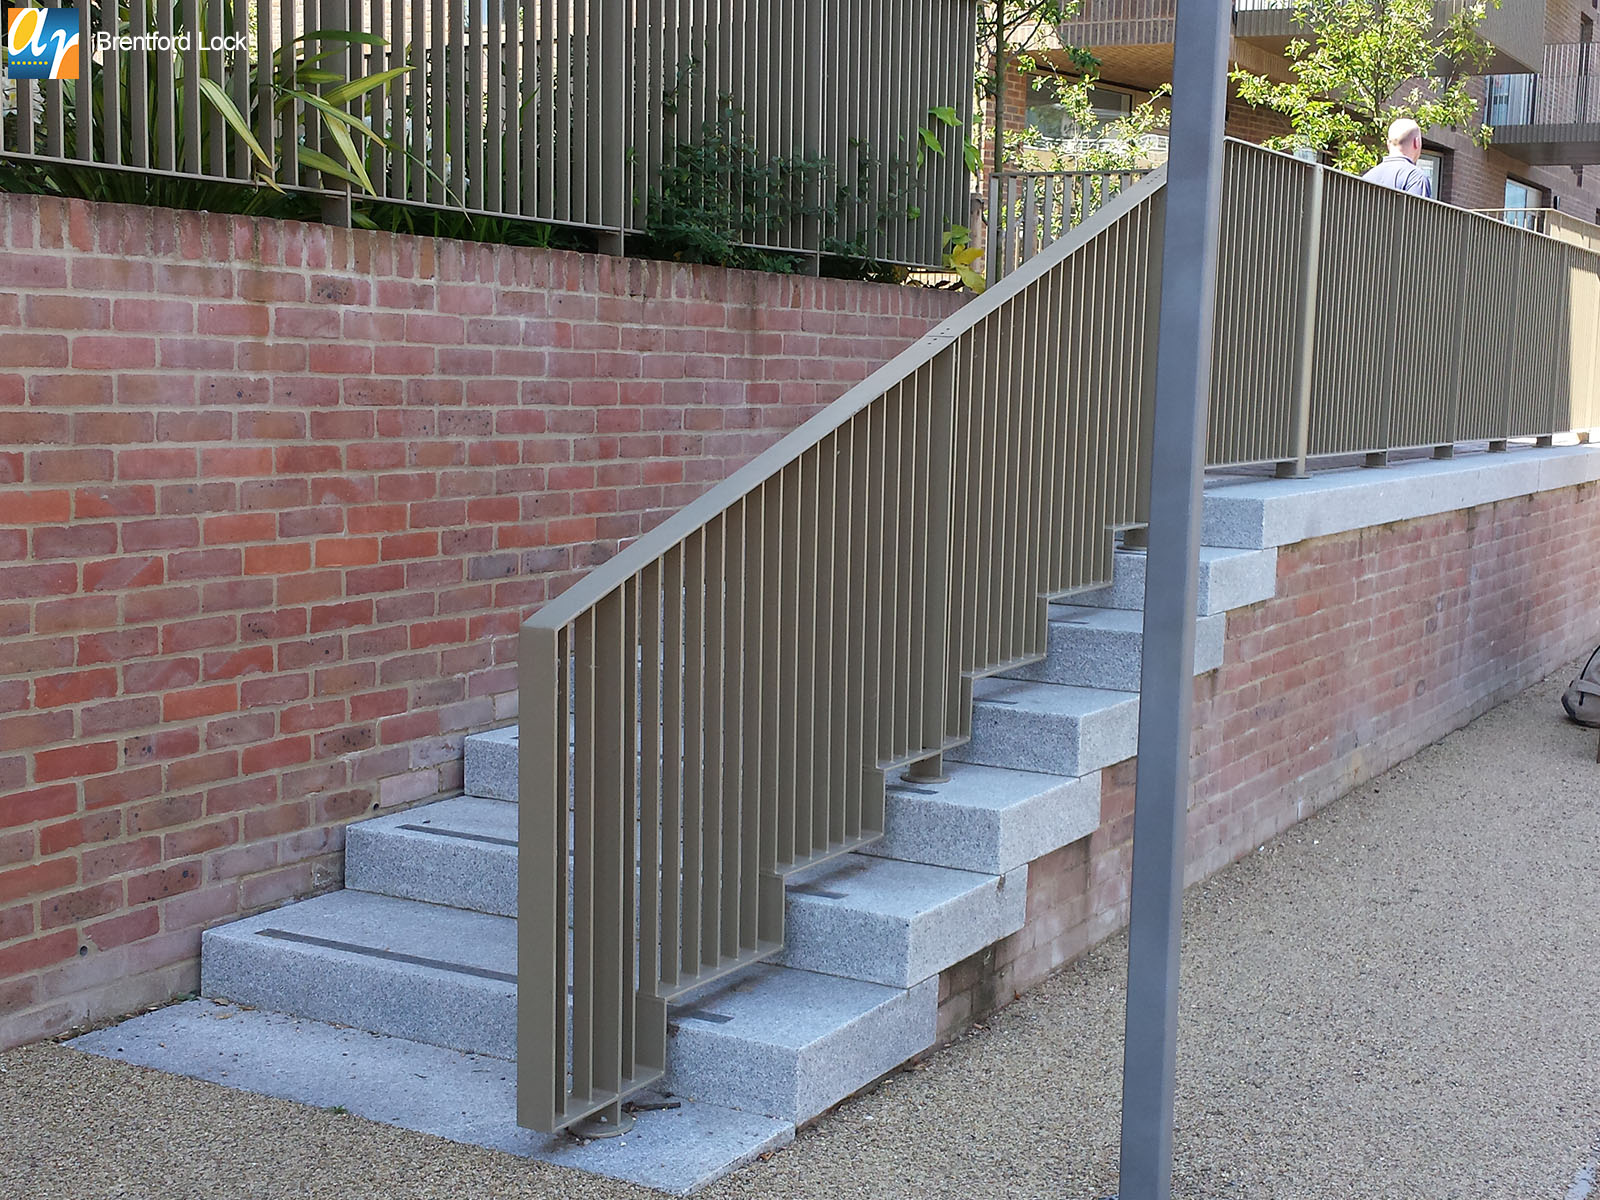 Brenford Lock flat top metal railings